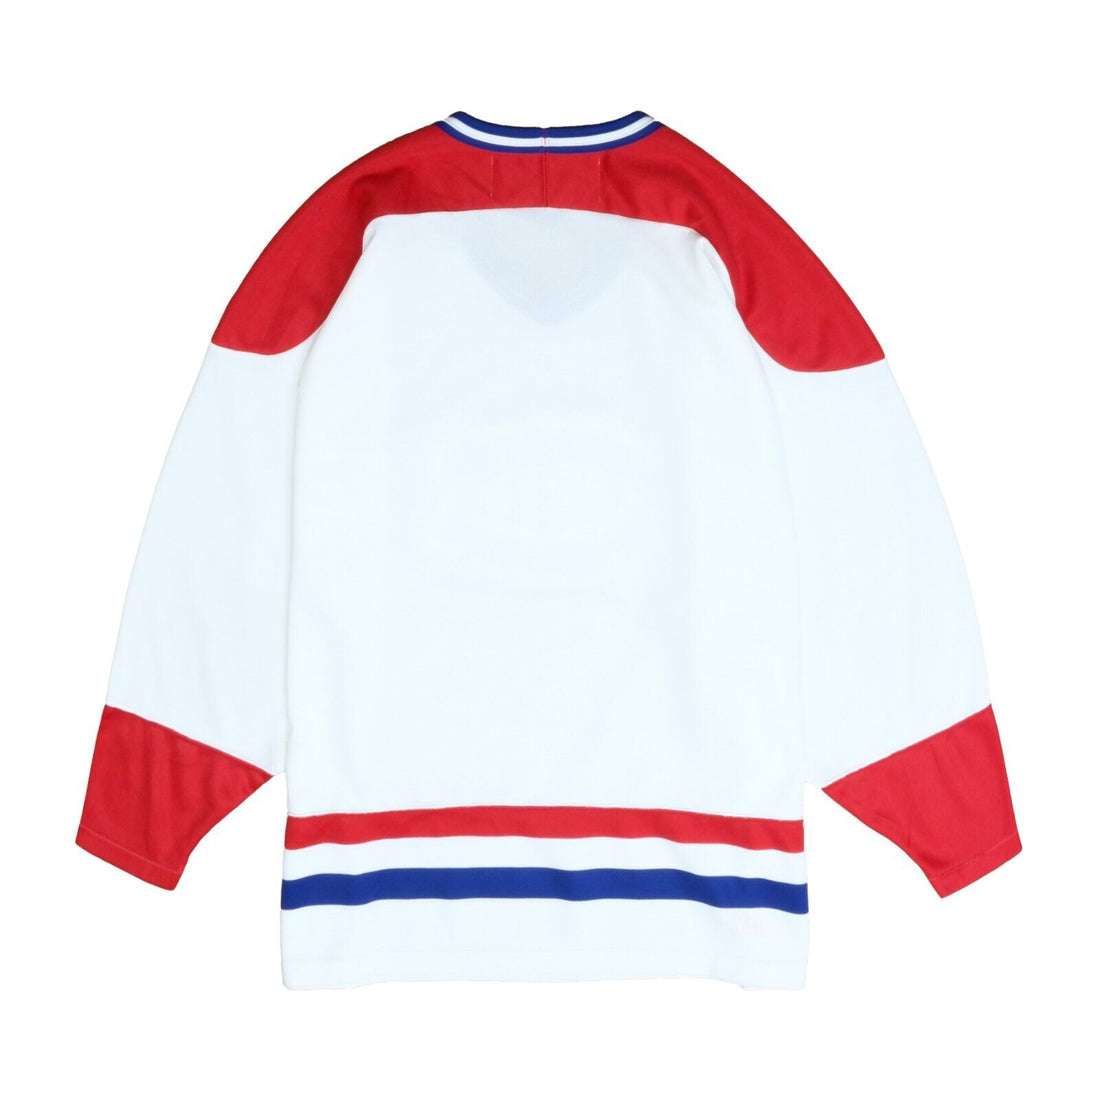 Vintage Montreal Canadiens CCM Hockey Jersey Size Medium White 90s NHL